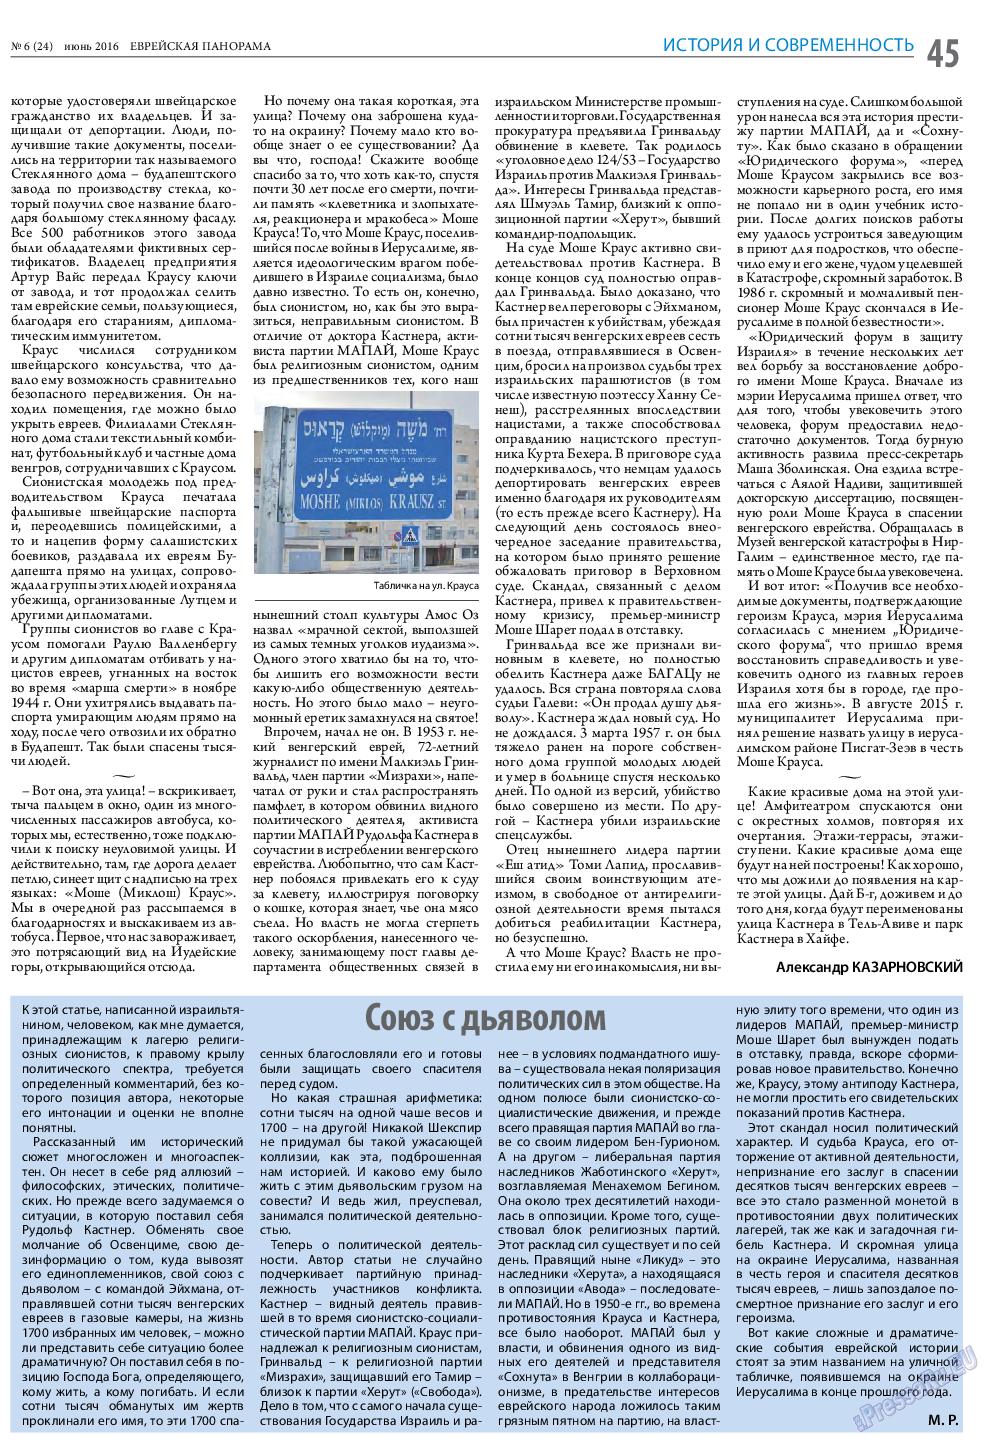 Еврейская панорама, газета. 2016 №6 стр.45